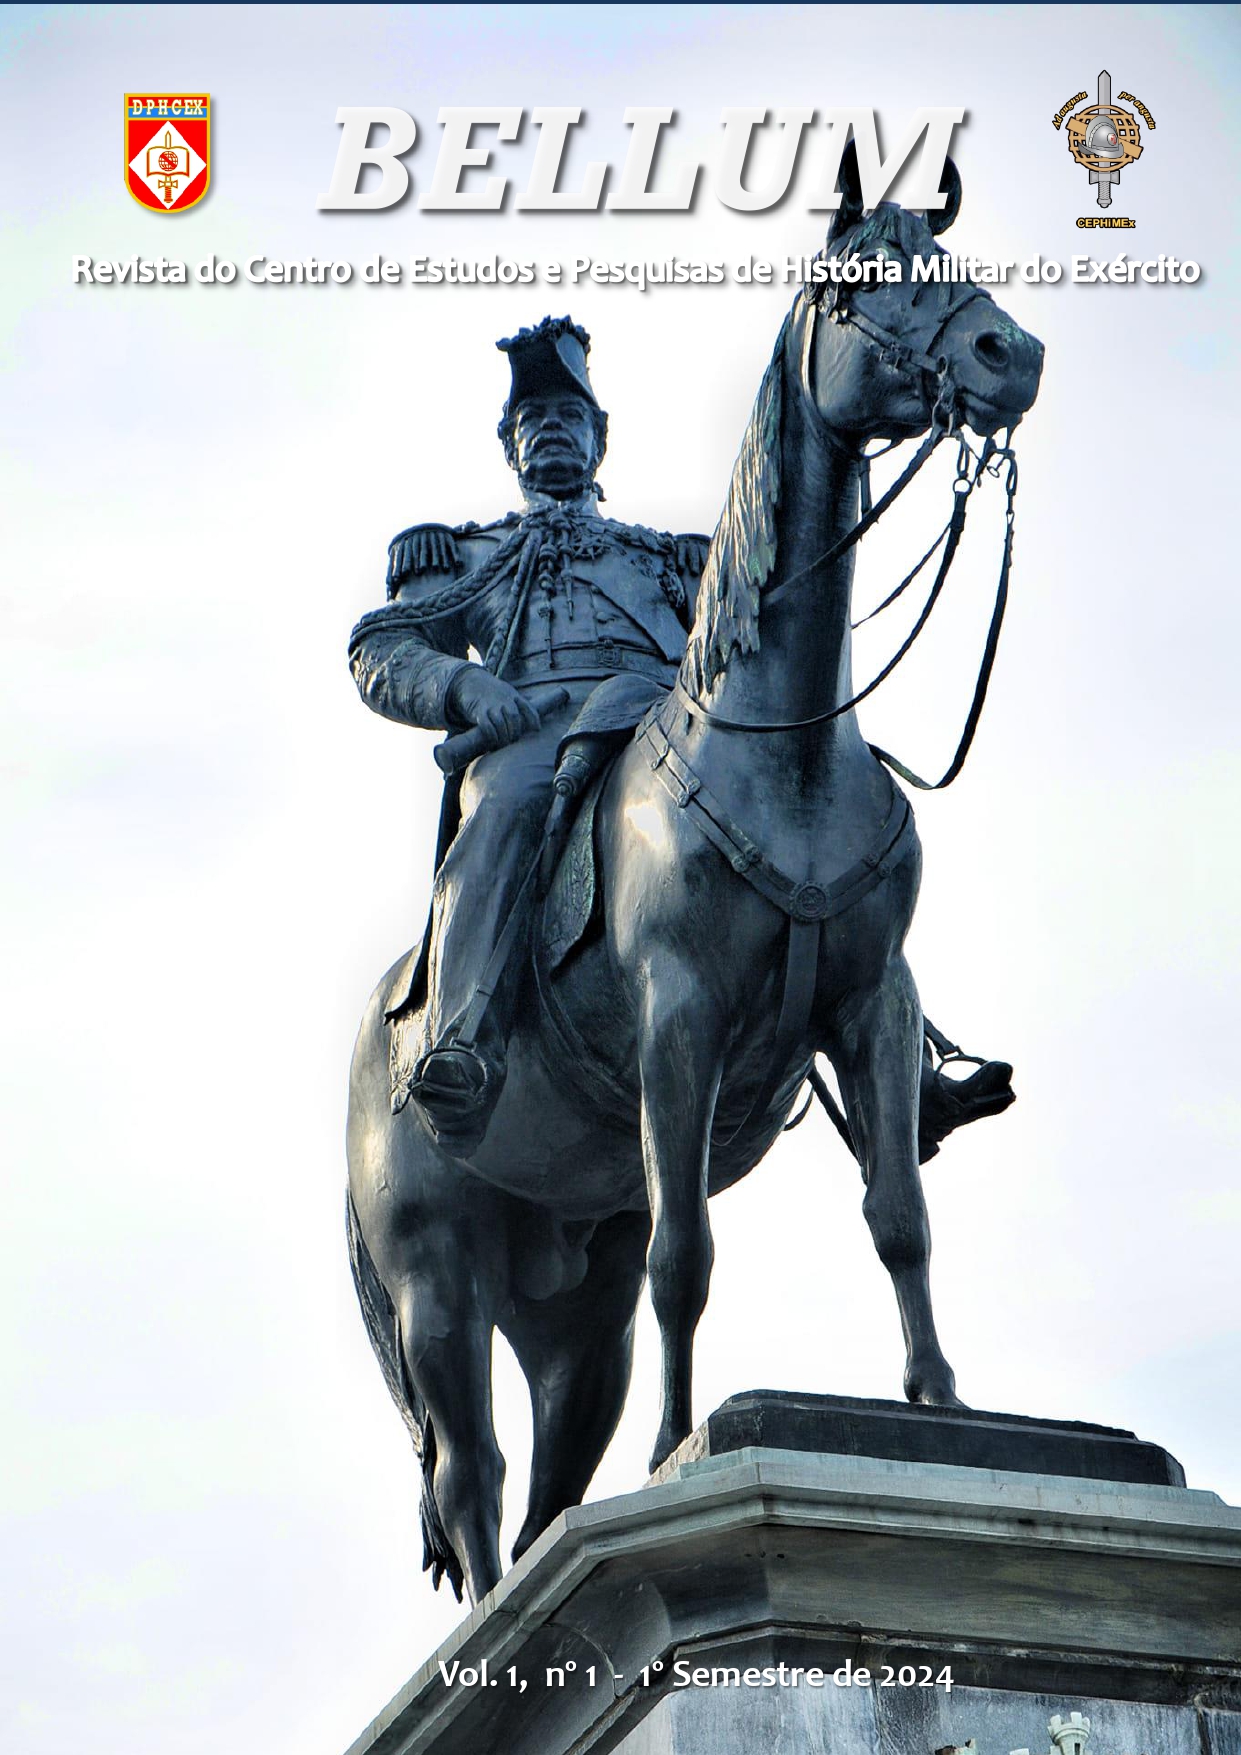 Estátua equestre do Duque de Caxias no Pantheon de Caxias. Fonte: DPHCEx.